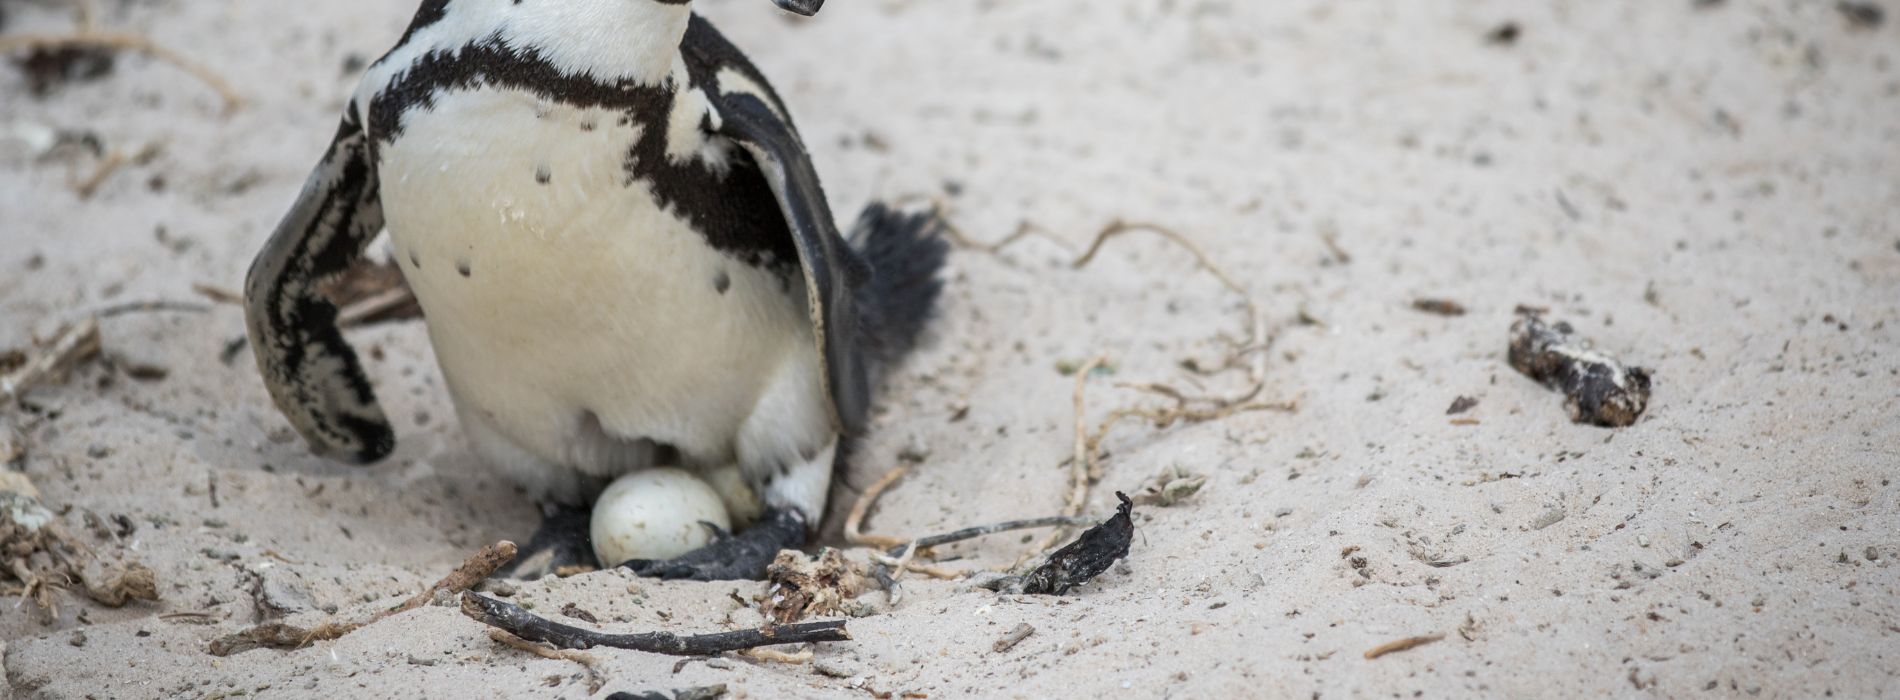 Do penguins lay eggs?